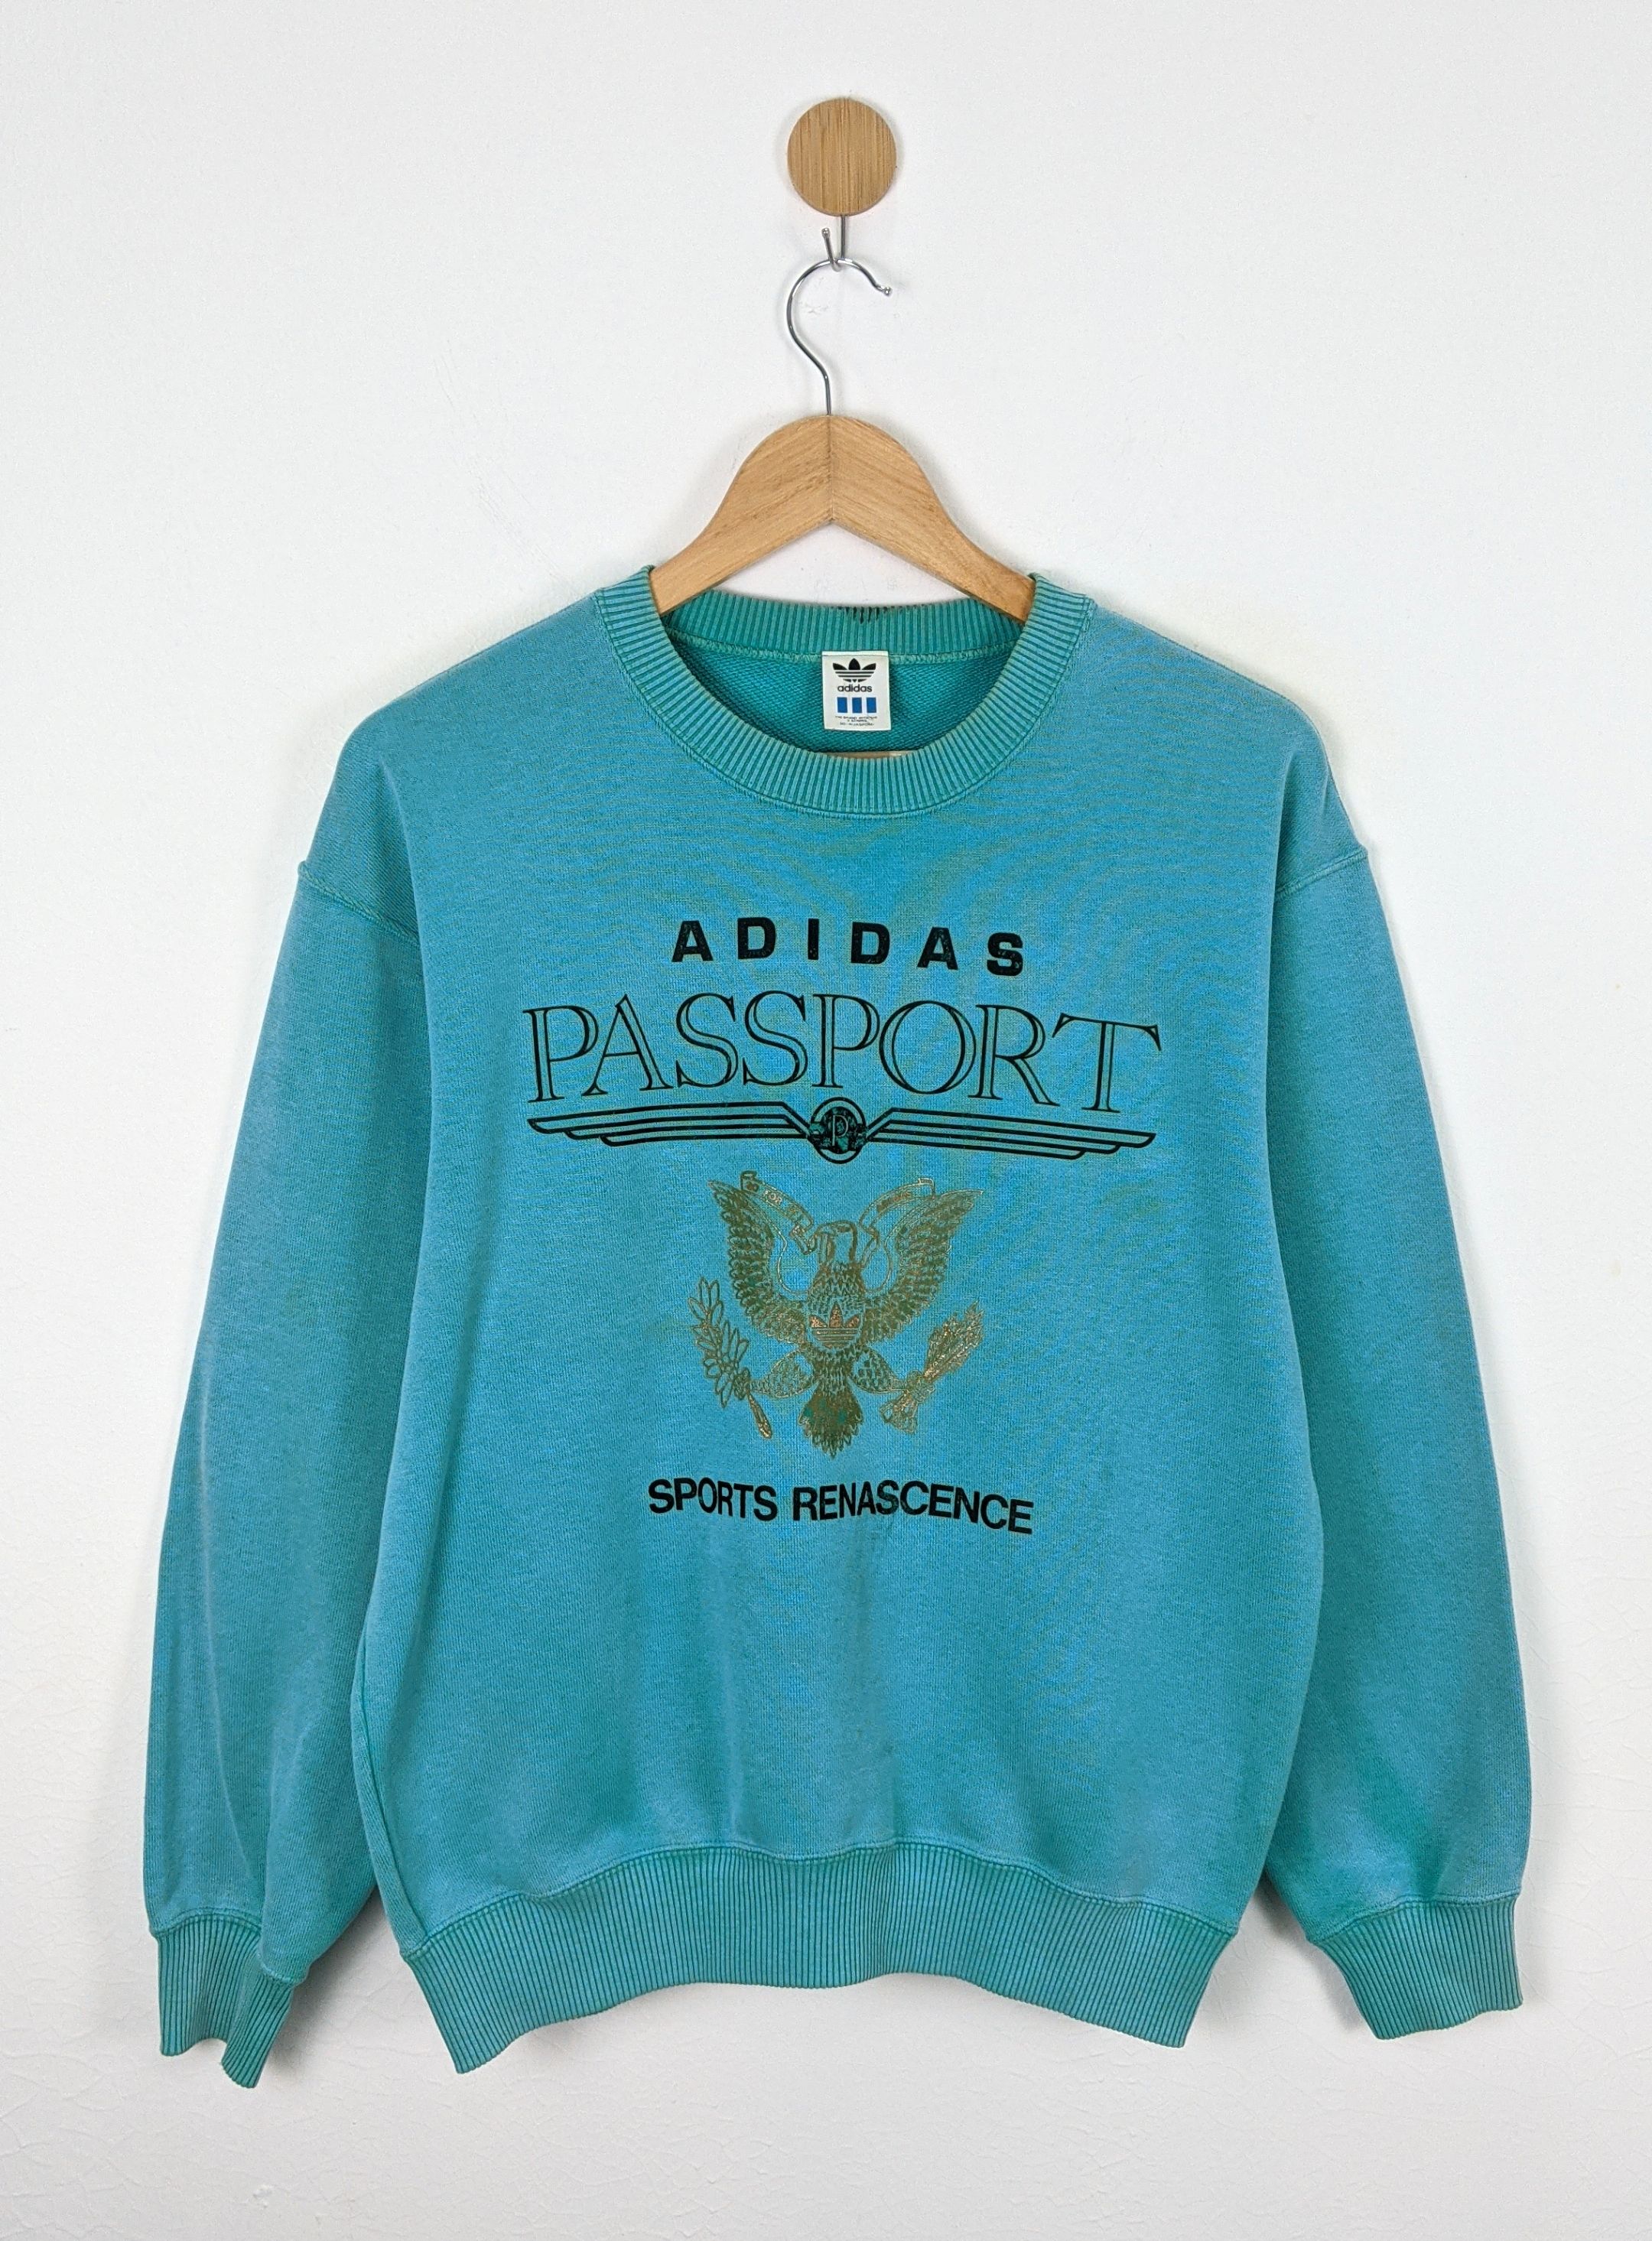 Adidas Vintage Adidas Passport sweatshirt Size US M / EU 48-50 / 2 - 1 Preview